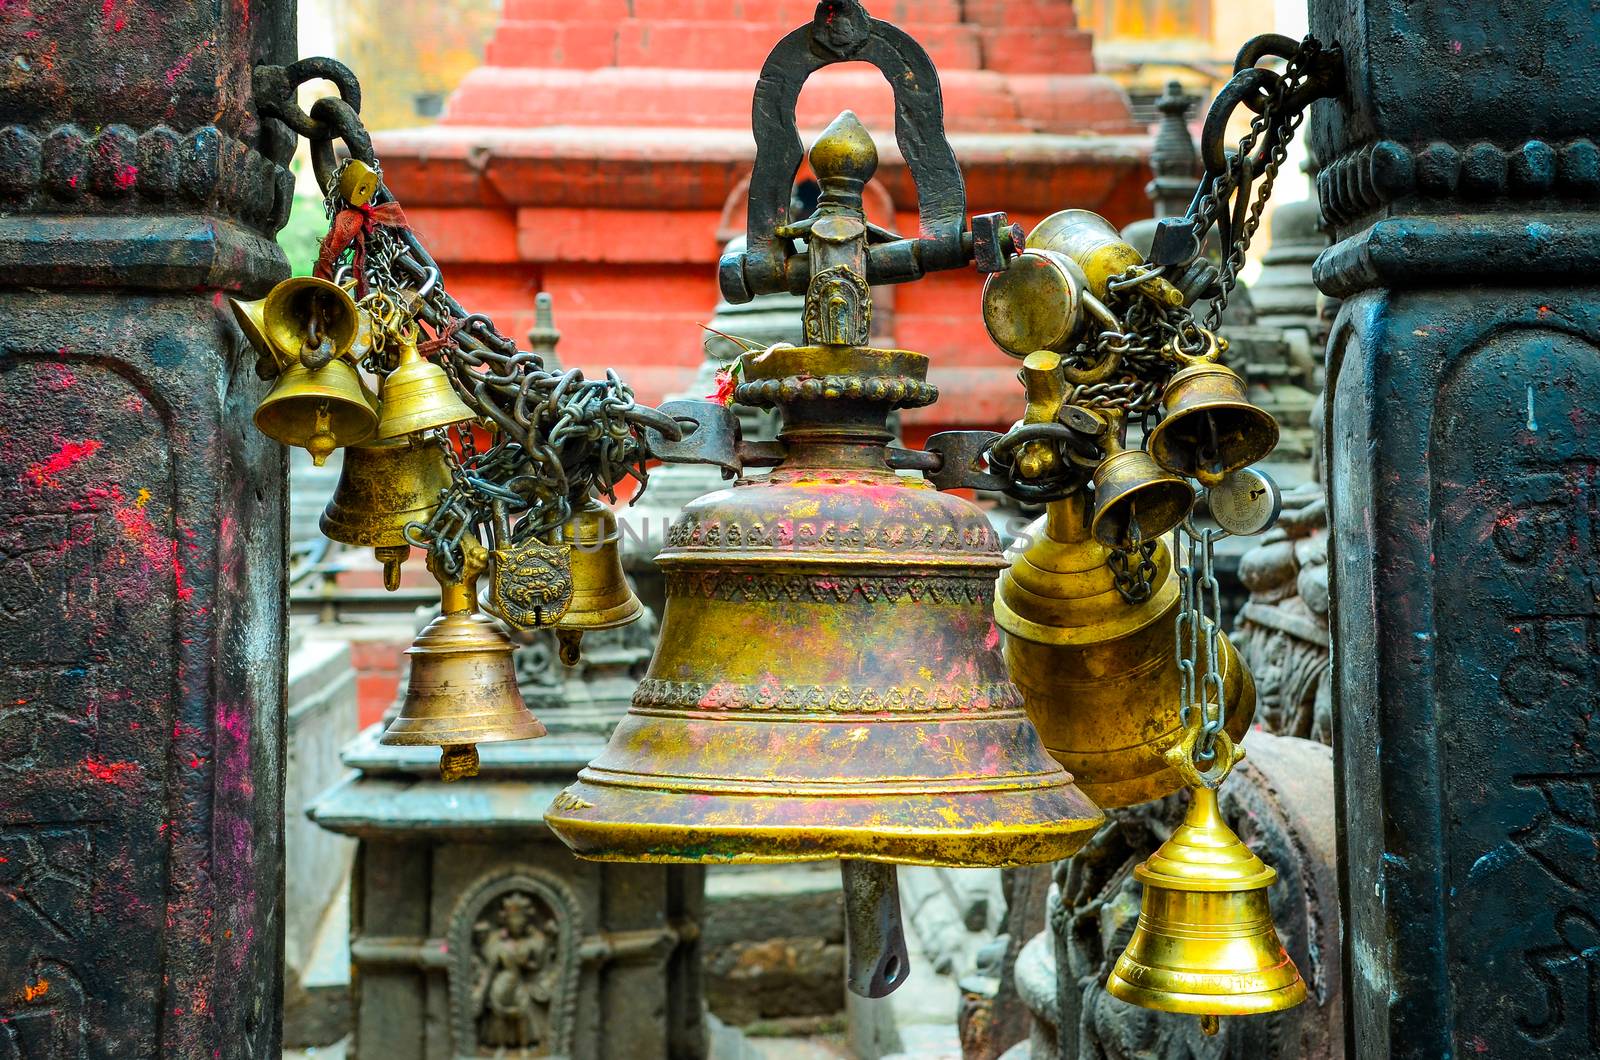 Detail of prayer bells in buddhist and hindu temple, Kathmandu by martinm303